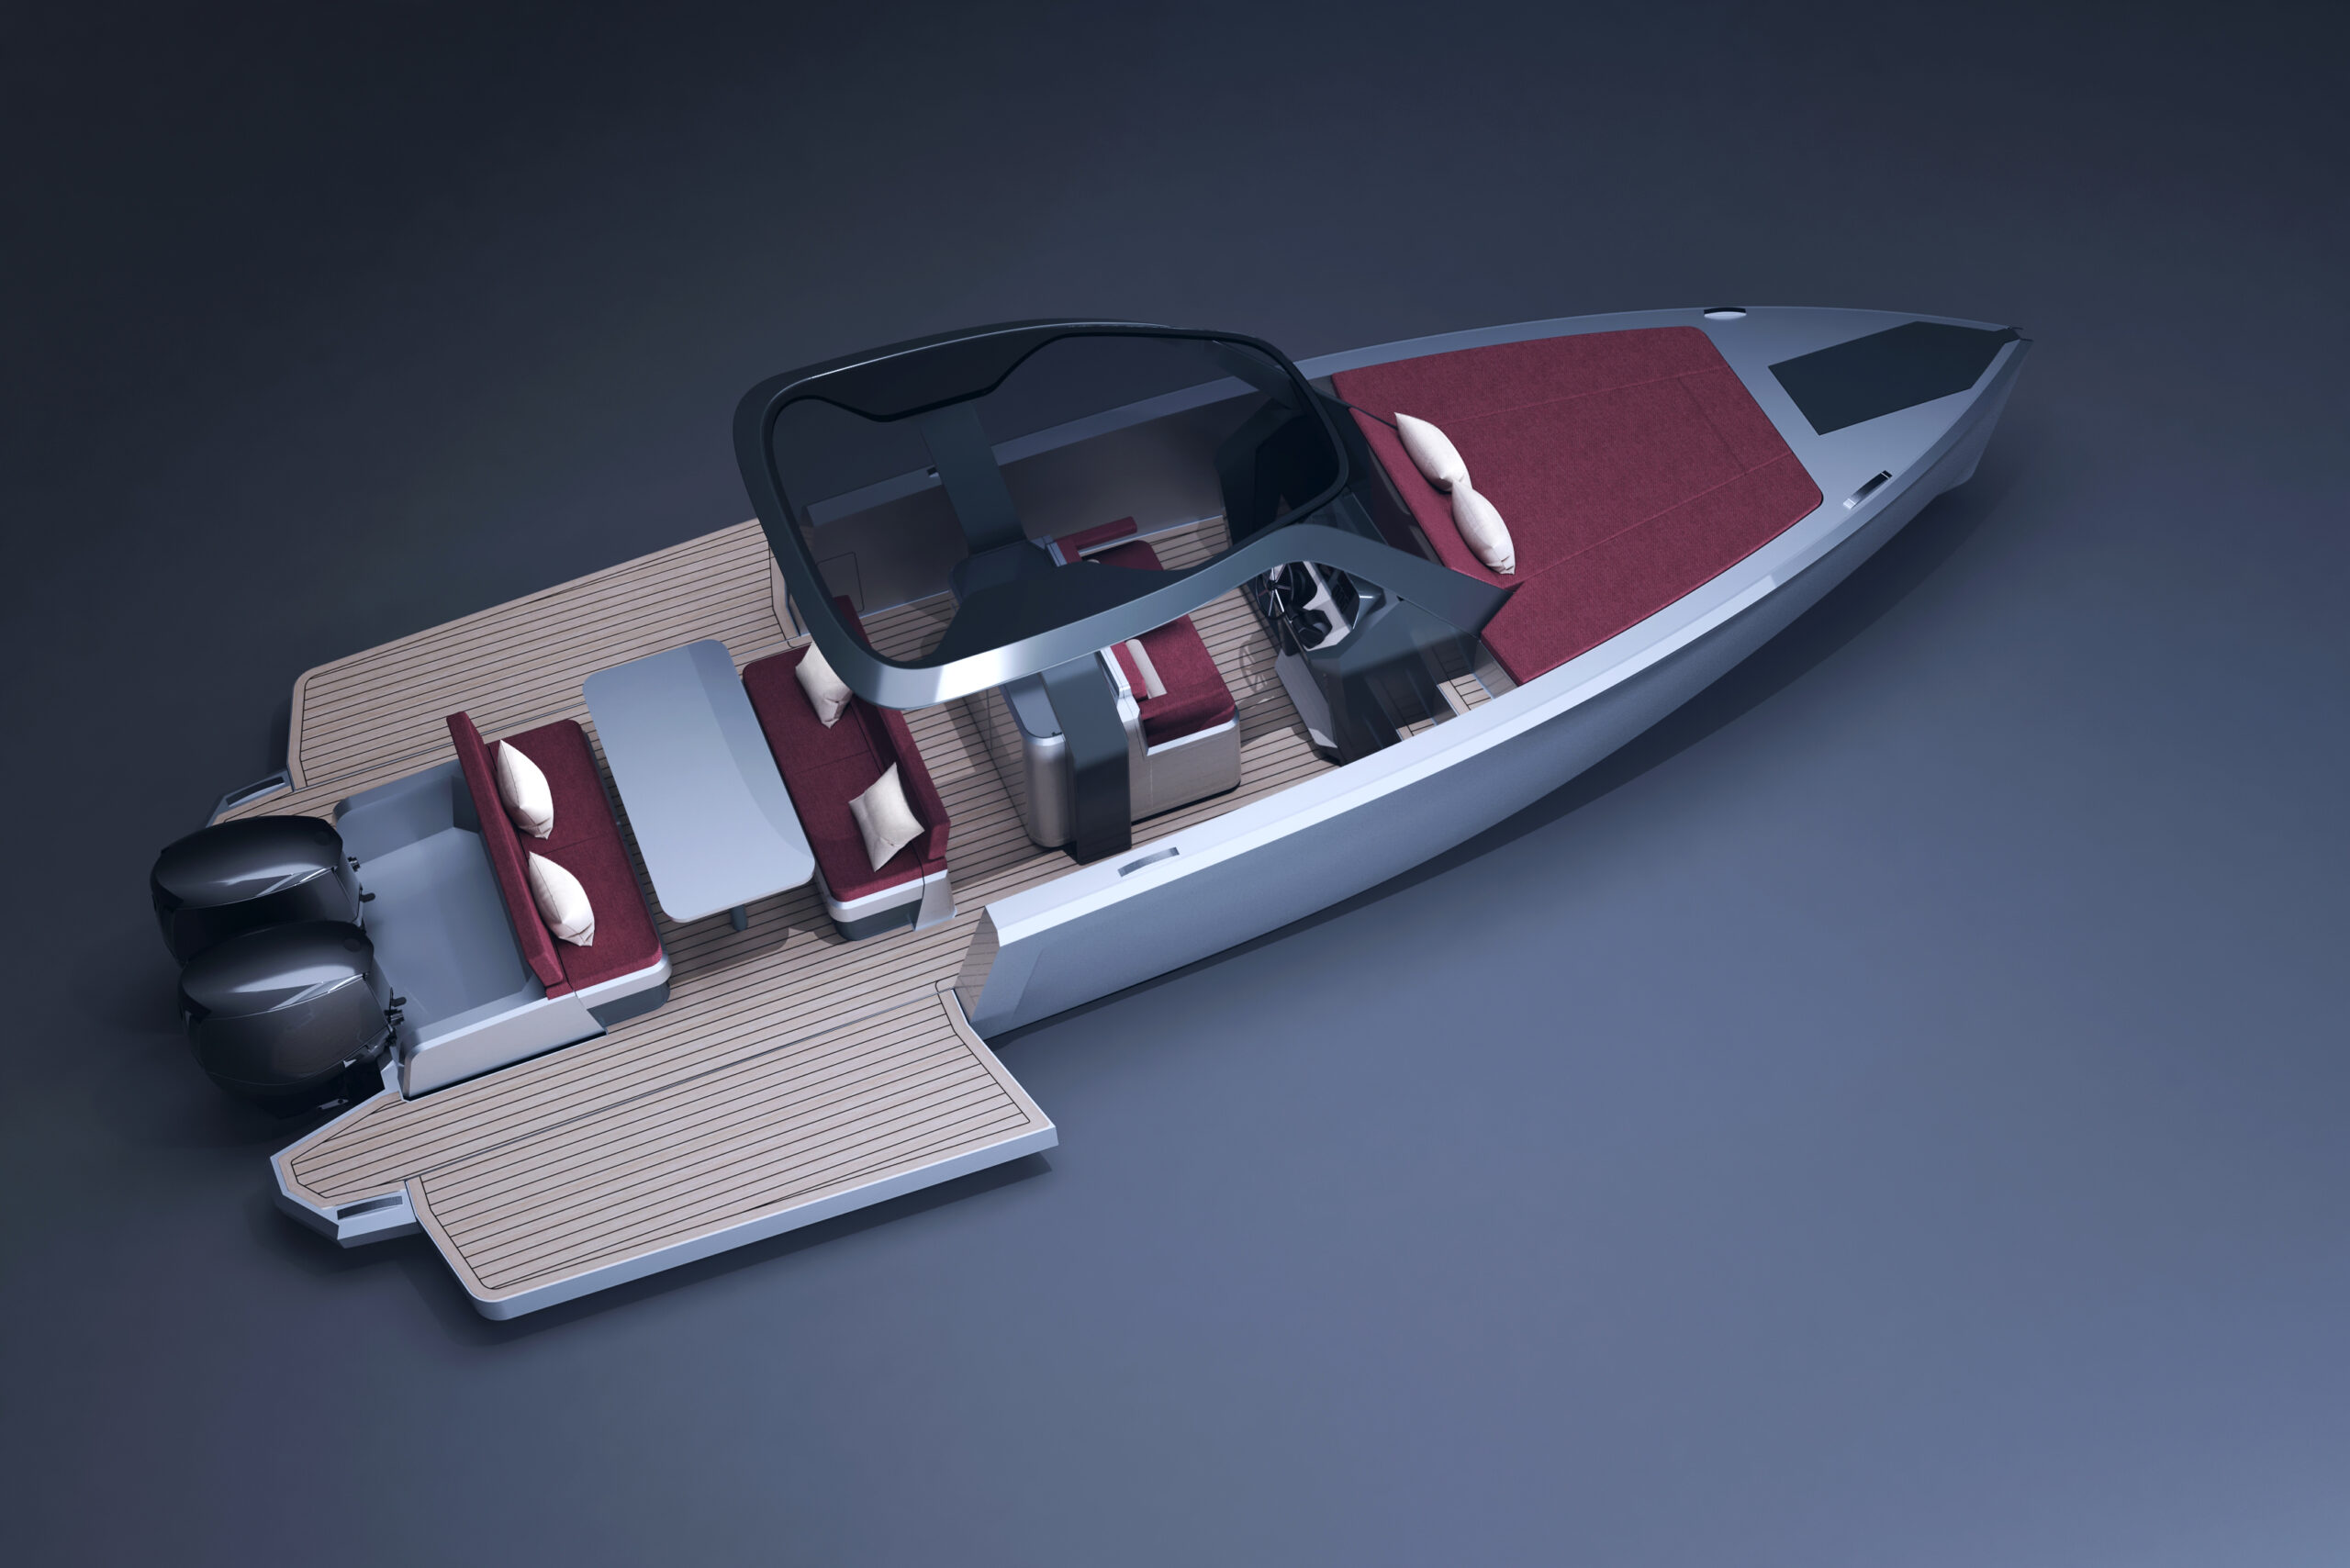 SwissCraft 9m - Yacht Design Collective